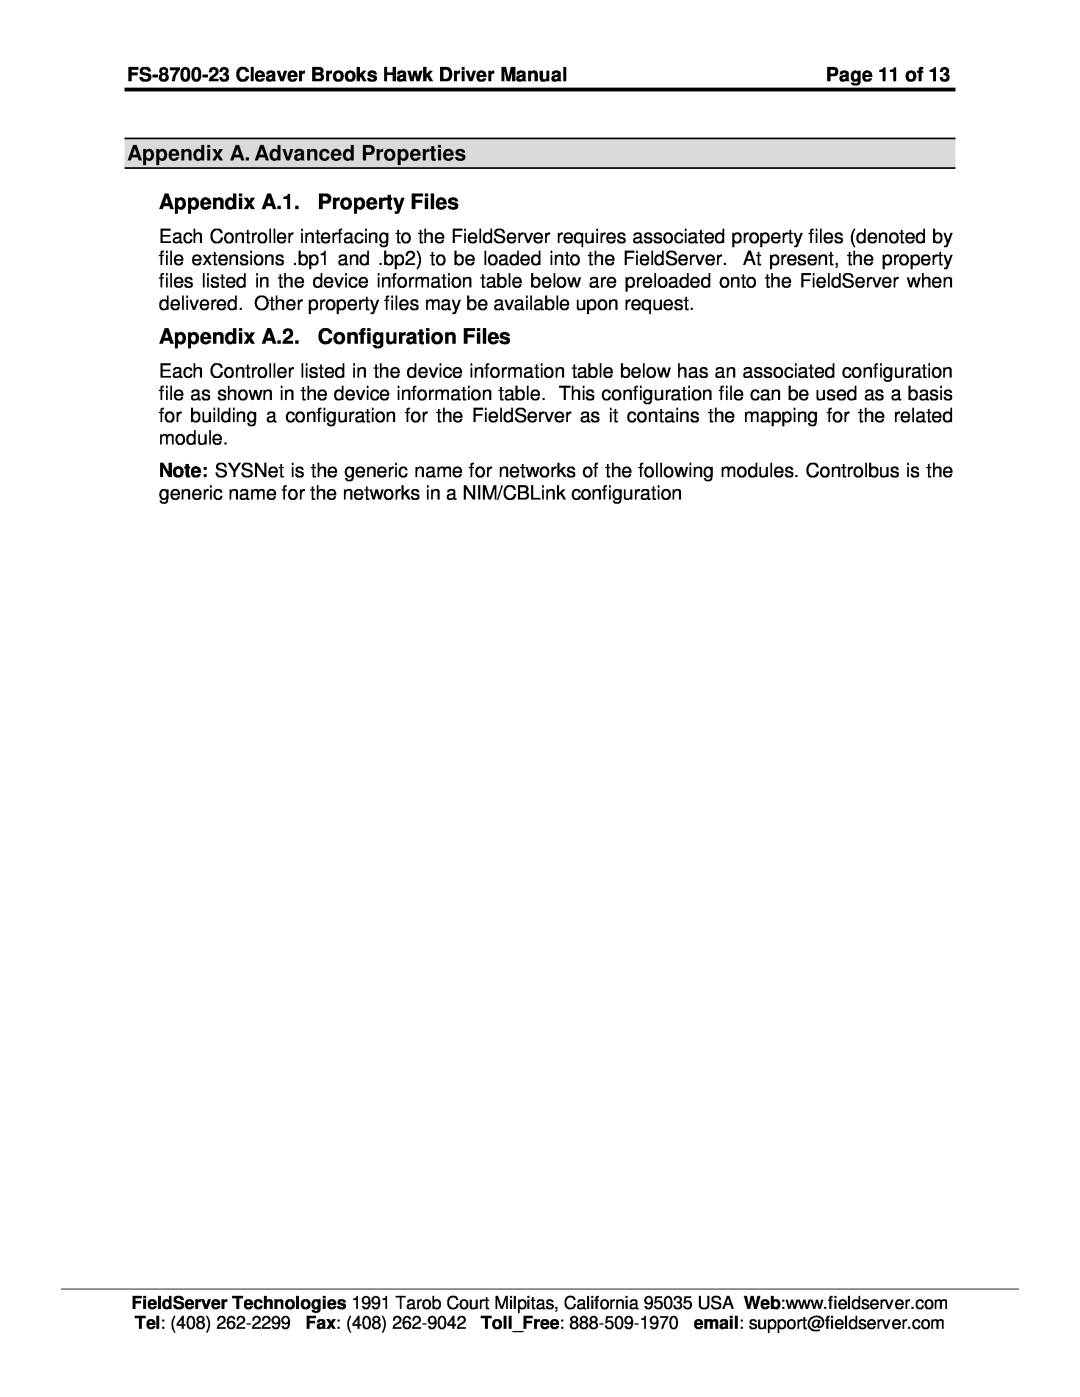 FieldServer FS-8700-23 Appendix A. Advanced Properties Appendix A.1. Property Files, Appendix A.2. Configuration Files 